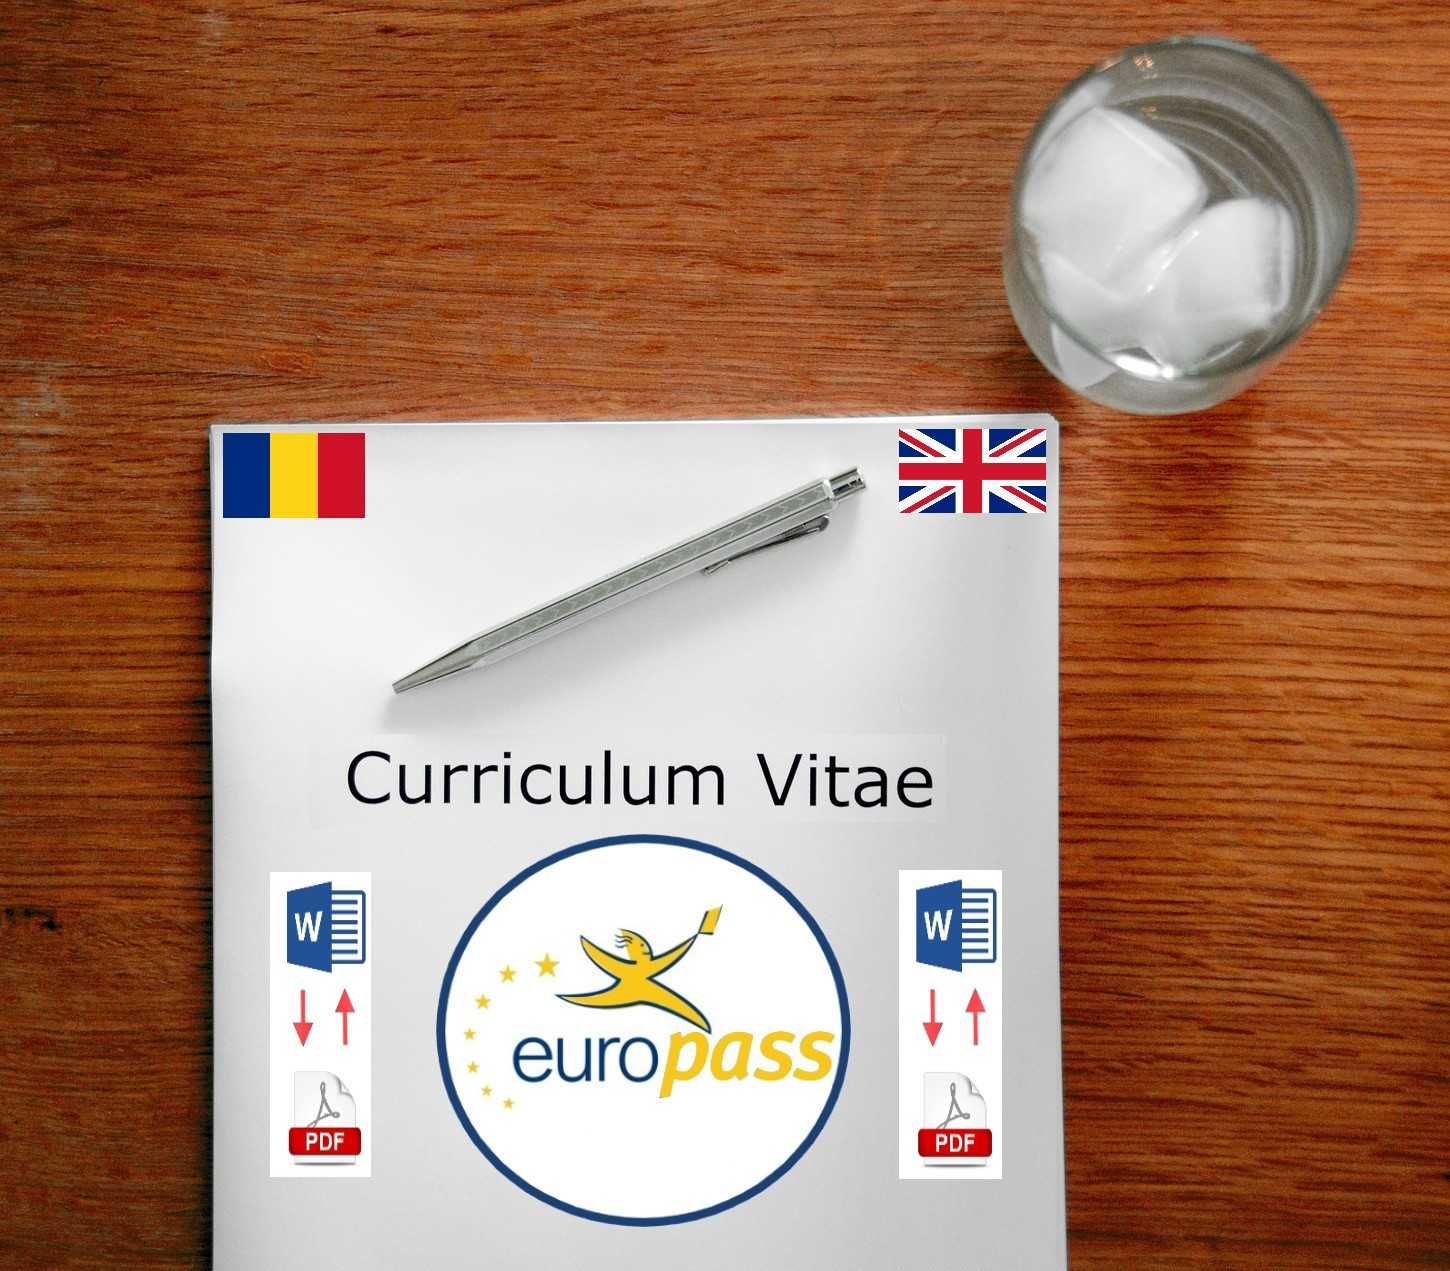 dorm|Curriculum Vitae|Curriculum Vitae Europass|Curriculum Vitae word|